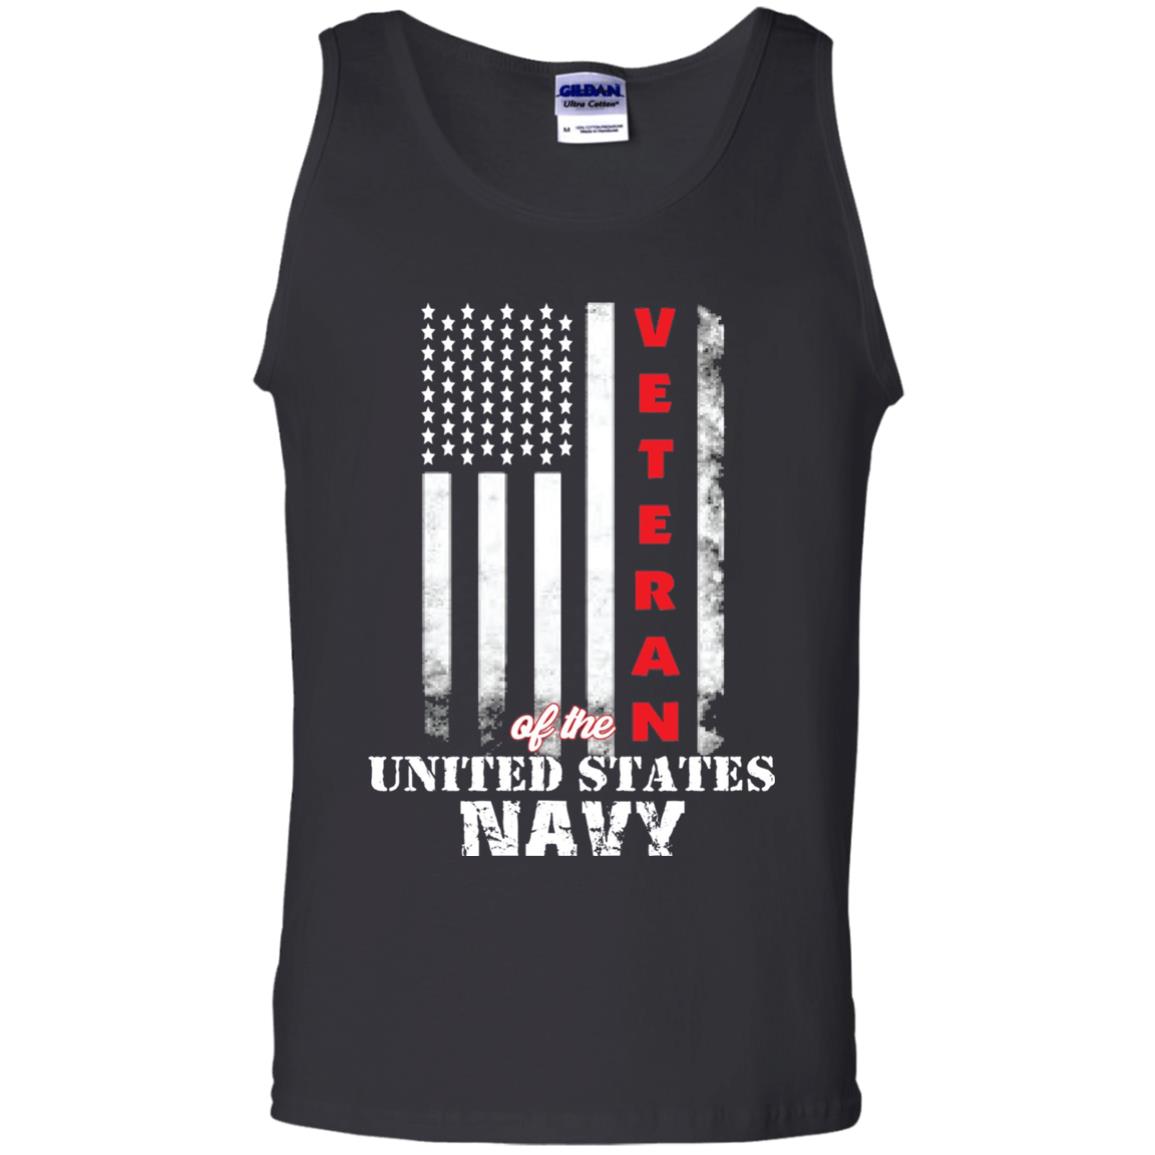 Armed Forces Us Navy Vintage Veteran T-shirt